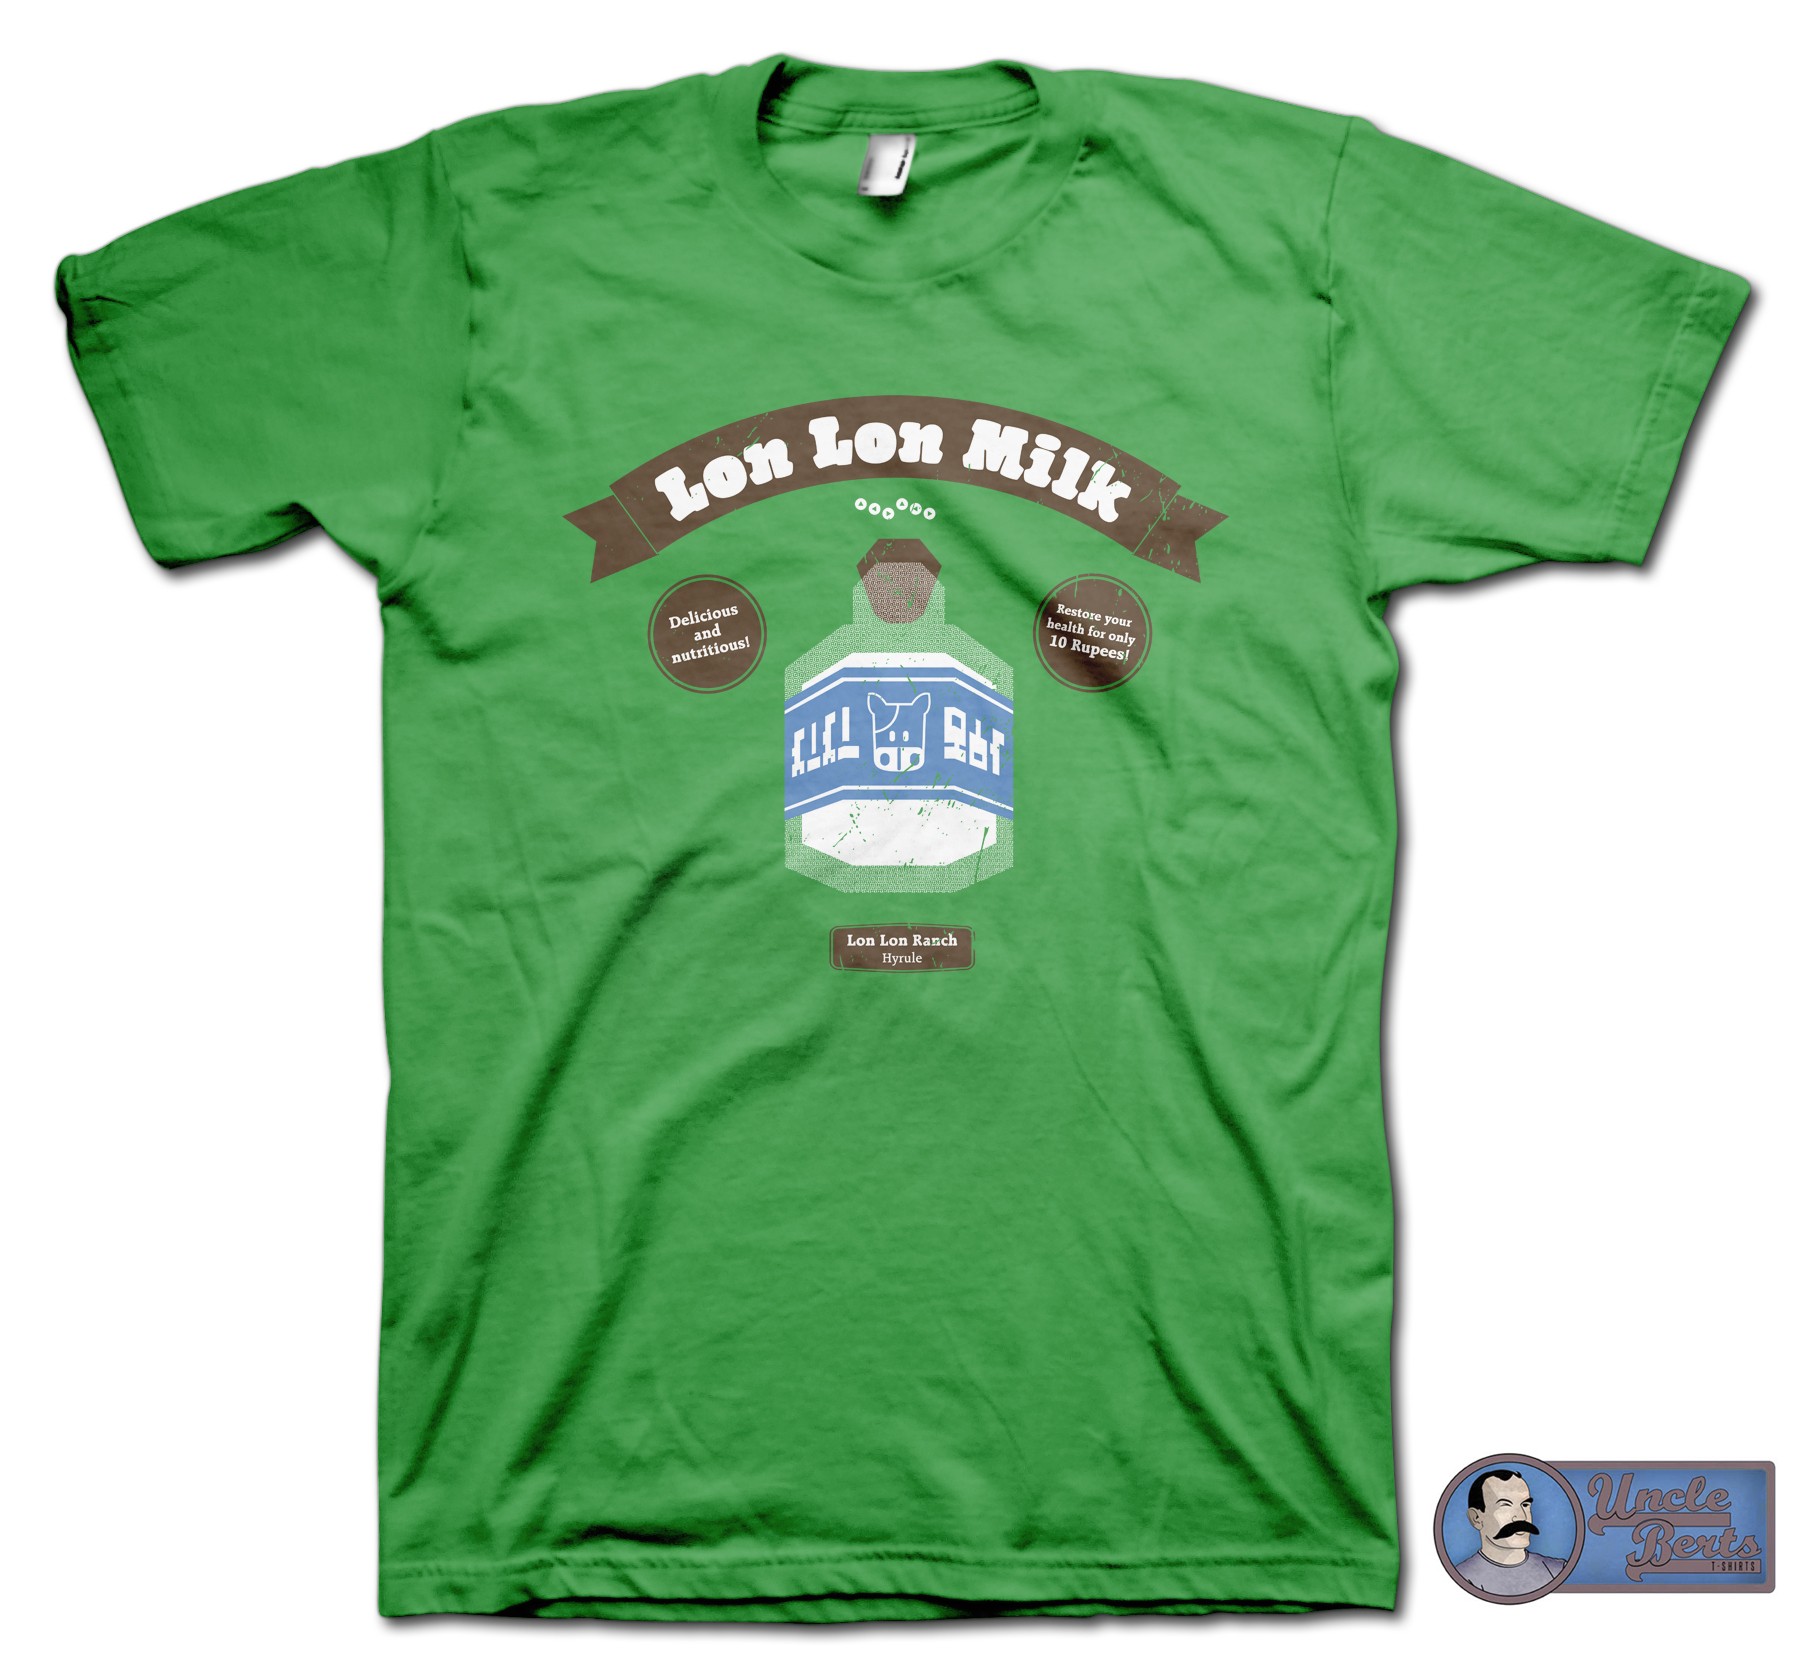 Lon Lon Milk T-Shirt - inspired by the Legend of Zelda series